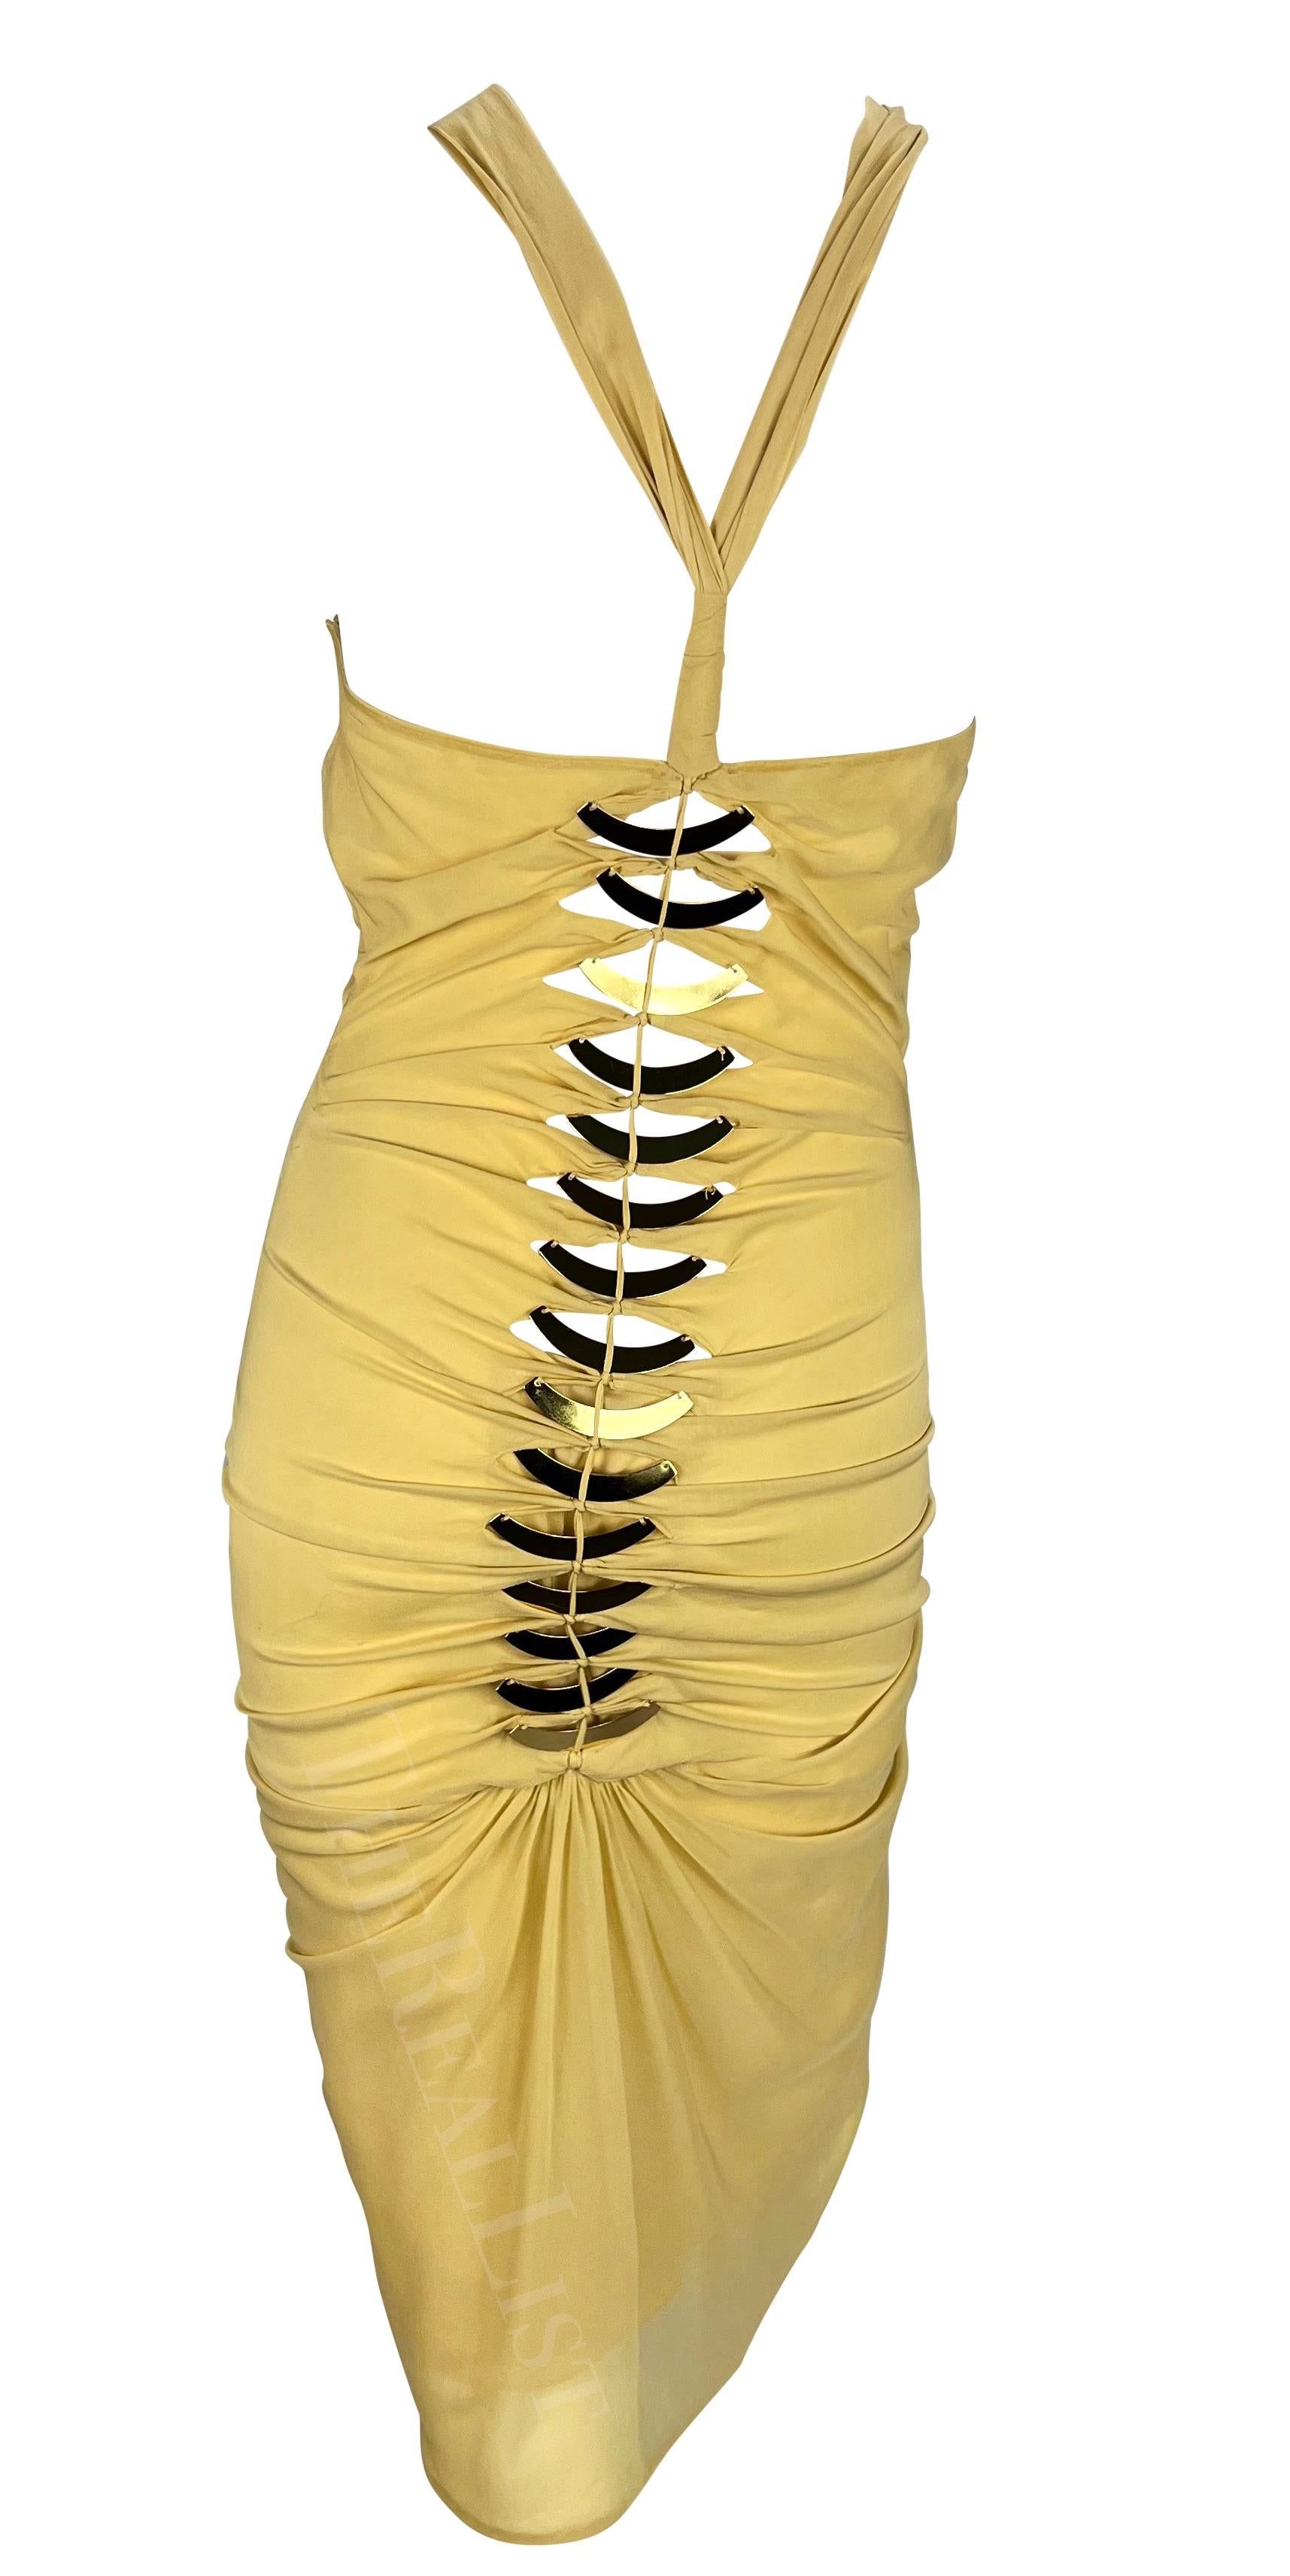 S/S 2005 Gucci Beige Cutout Gold-Tone Metal Spine Bodycon Mini Dress For Sale 3